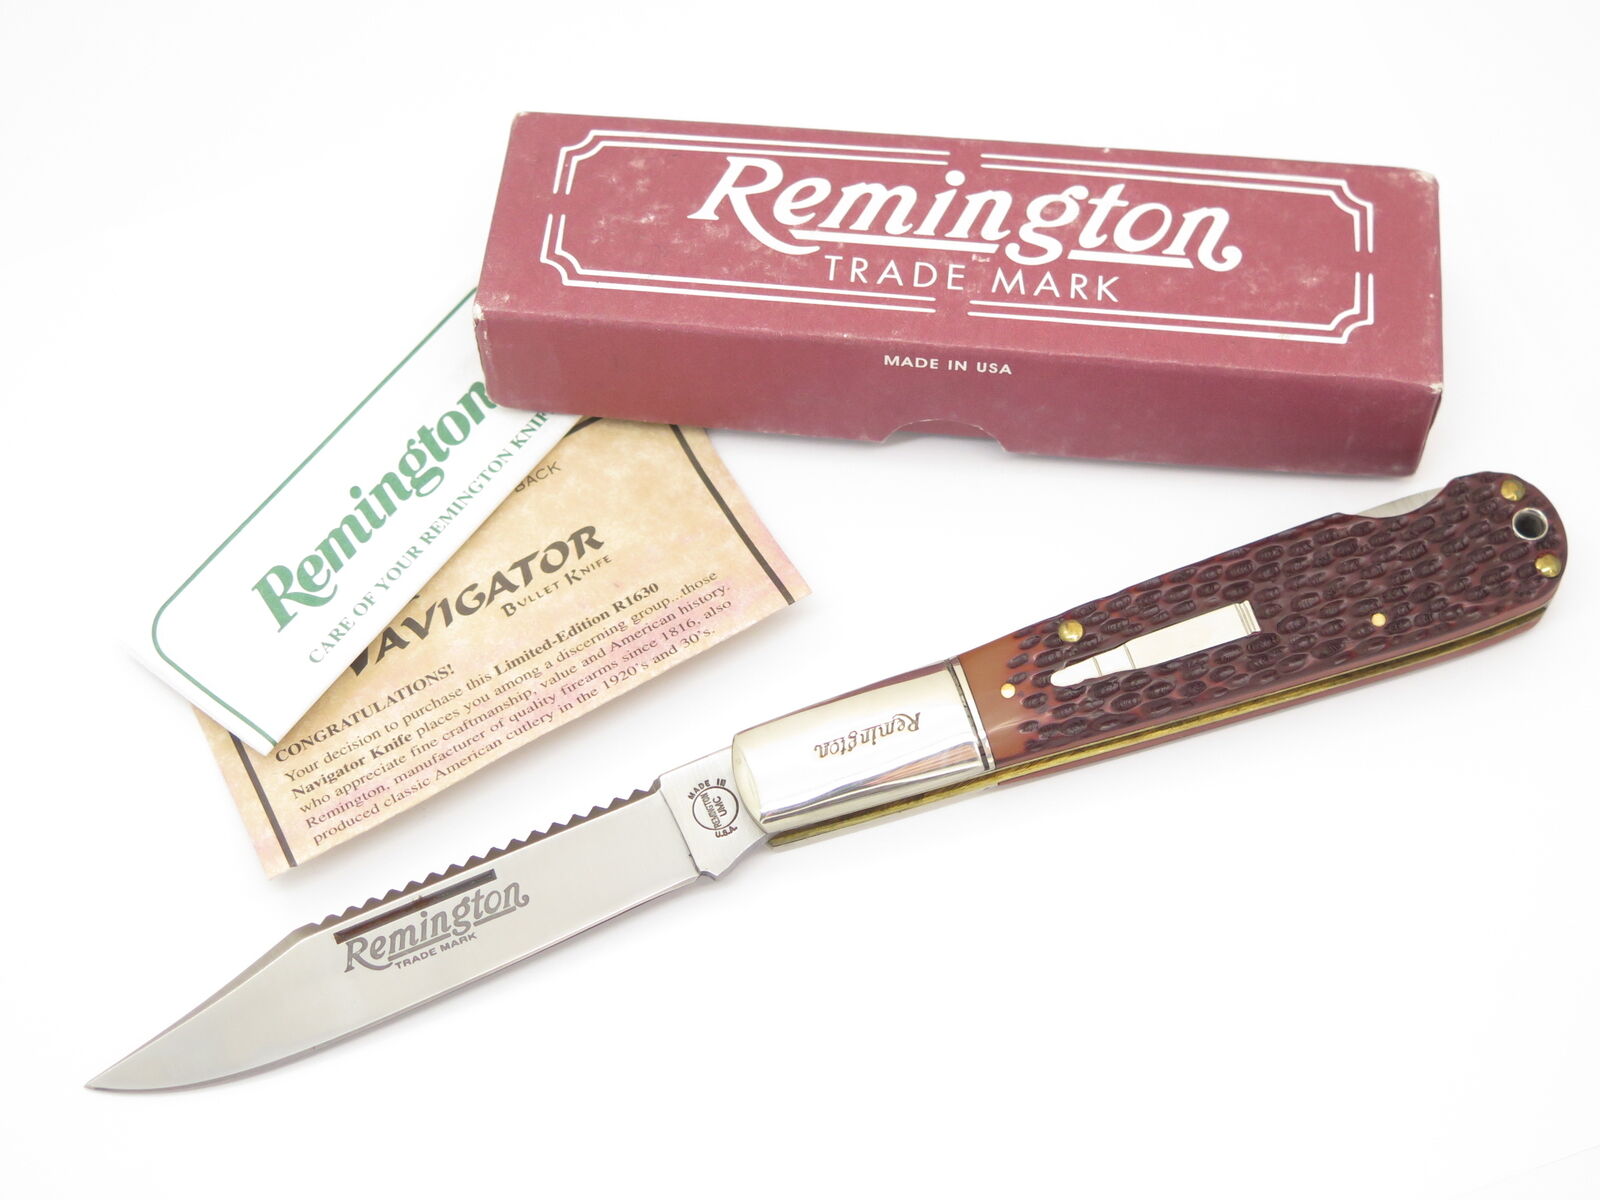 2000 Remington R1630 Navigator USA Bullet Delrin Lockback Folding Pocket Knife